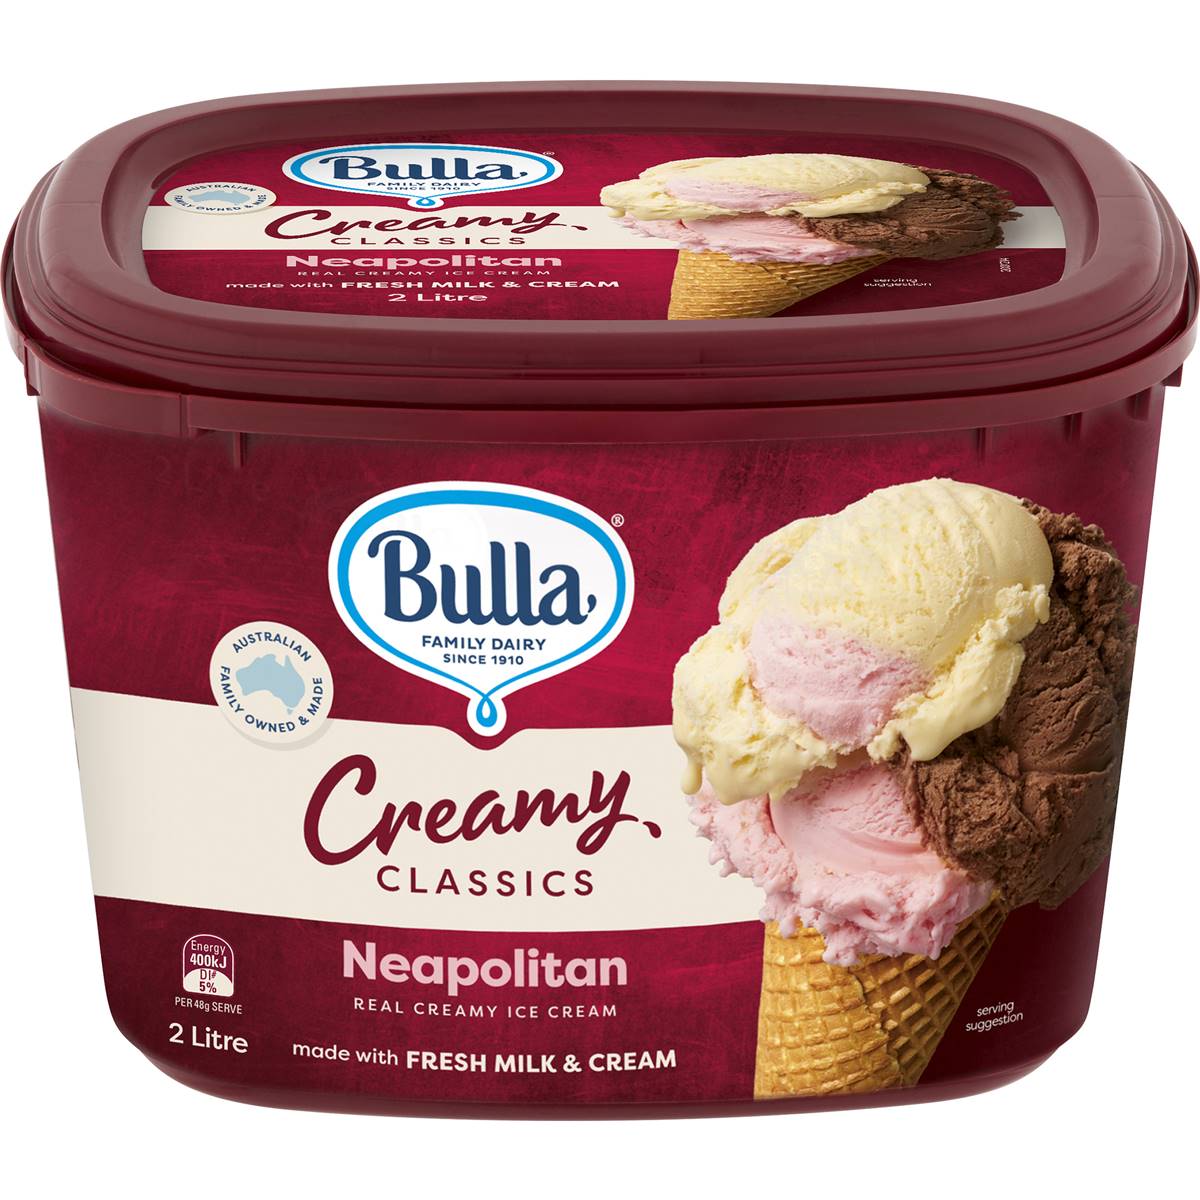 Calories in Bulla Creamy Classics Neapolitan Tub